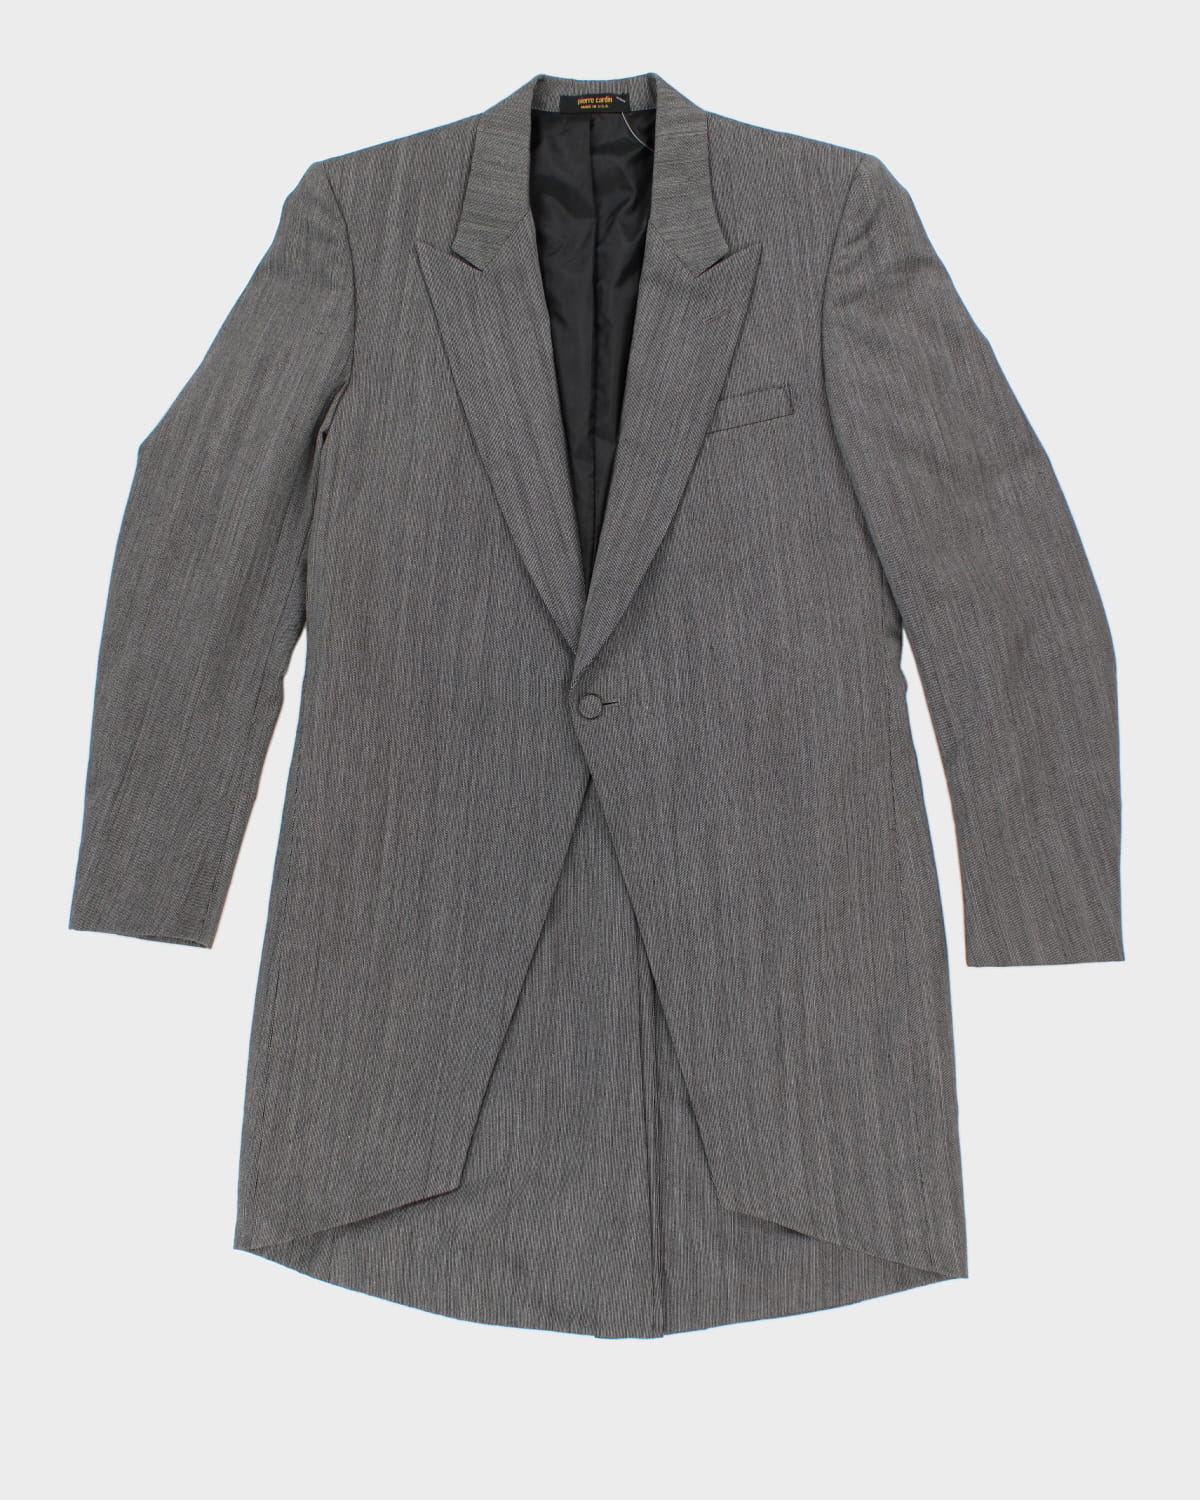 Pierre Cardin Dinner Suit Jacket - M